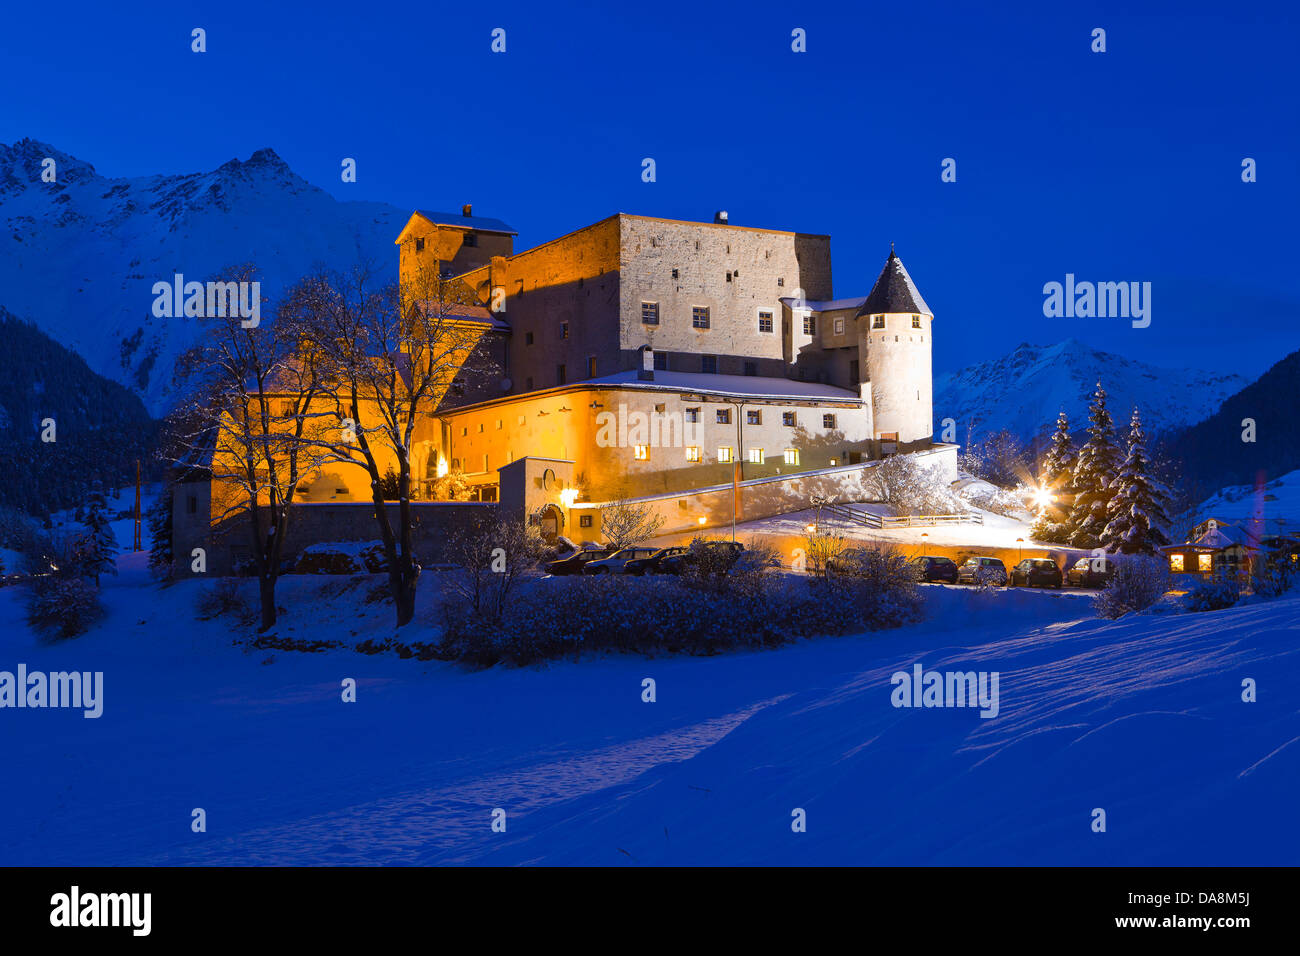 Austria, Europe, Tyrol, Oberinntal, Nauders, Reschenpass castle, Mountain Nauders, Naudersberg, Evening, Dusk, Twilight, Winter, Stock Photo